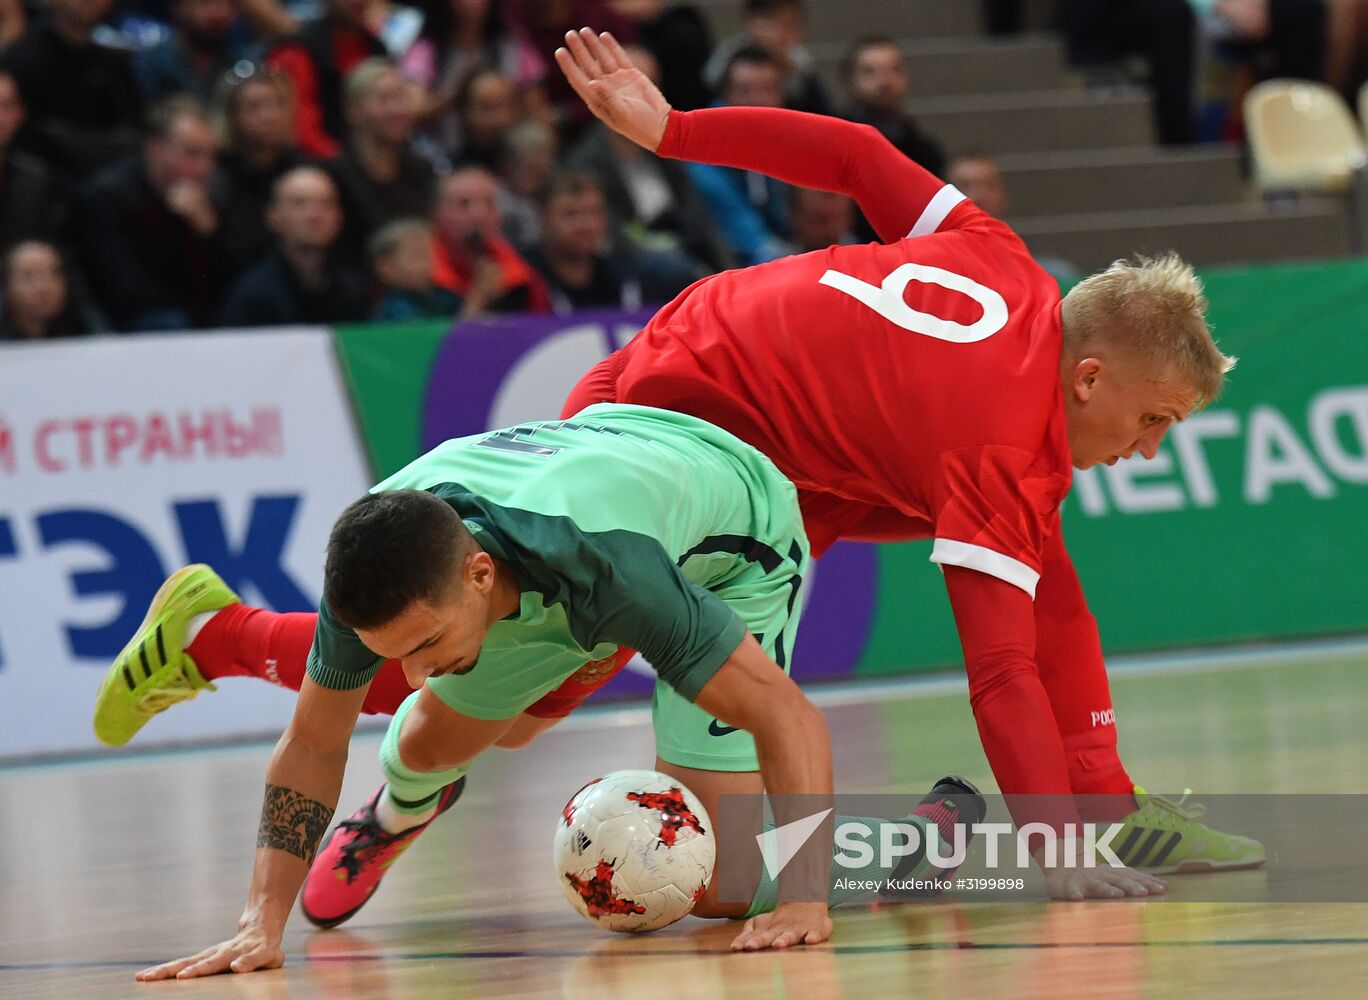 Russia-Portugal friendly futsal match